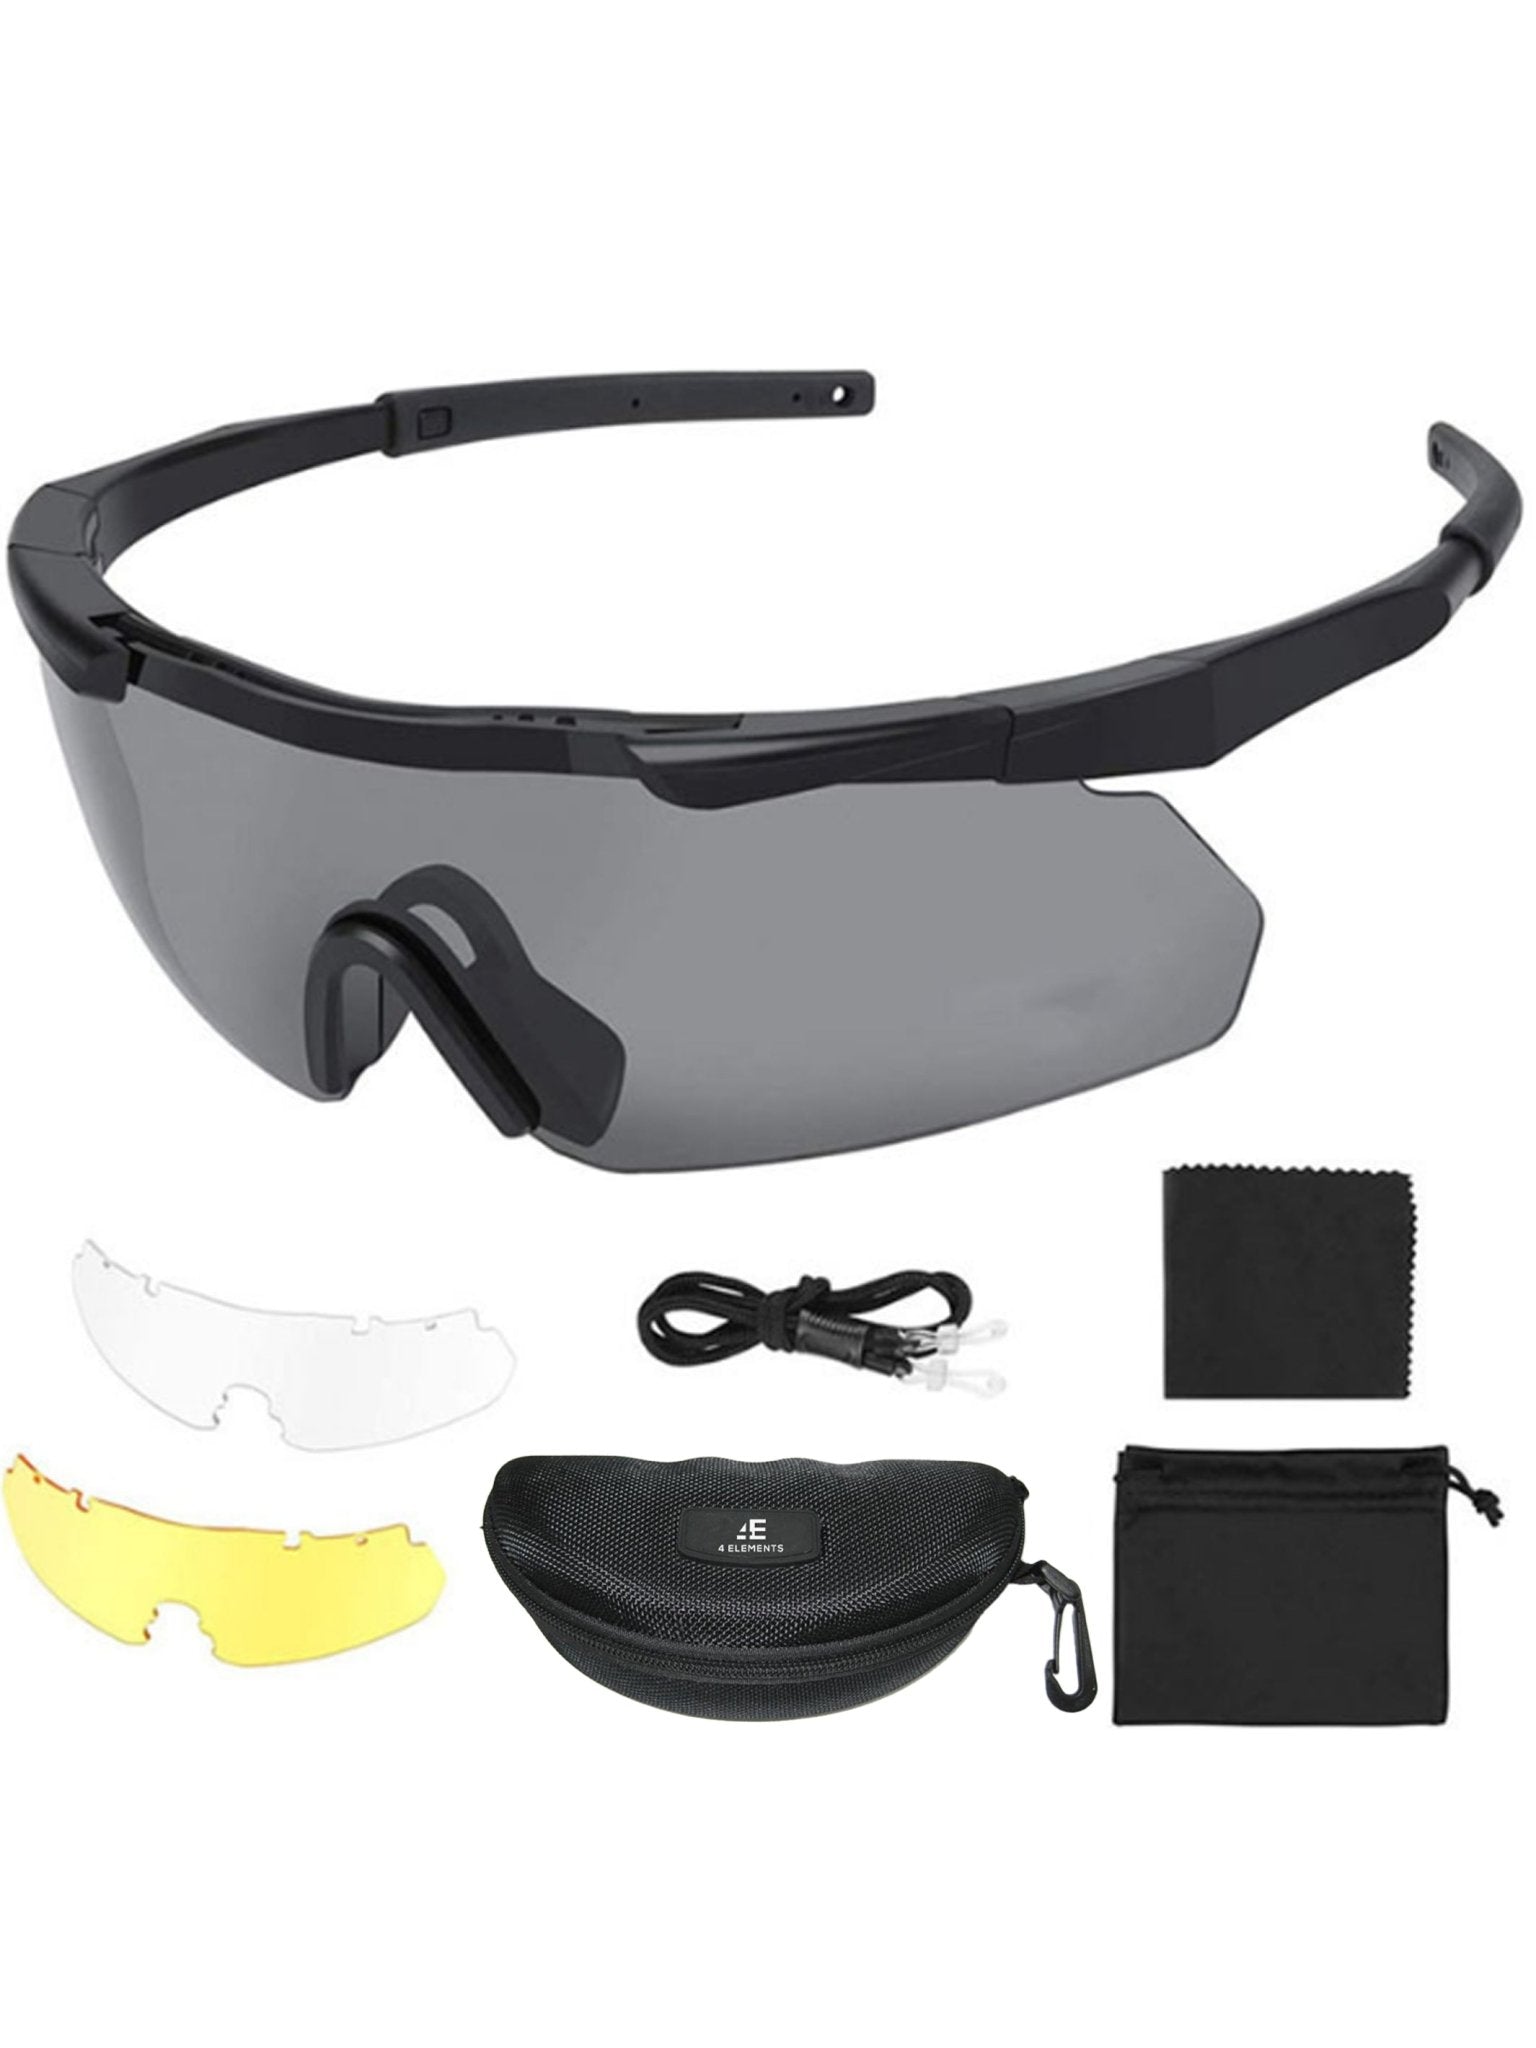 4 Elements Clothing 4 Elements - Shooting Glasses / Eye protection Clay Pigeon / eyewear skeet glasses sunglasses